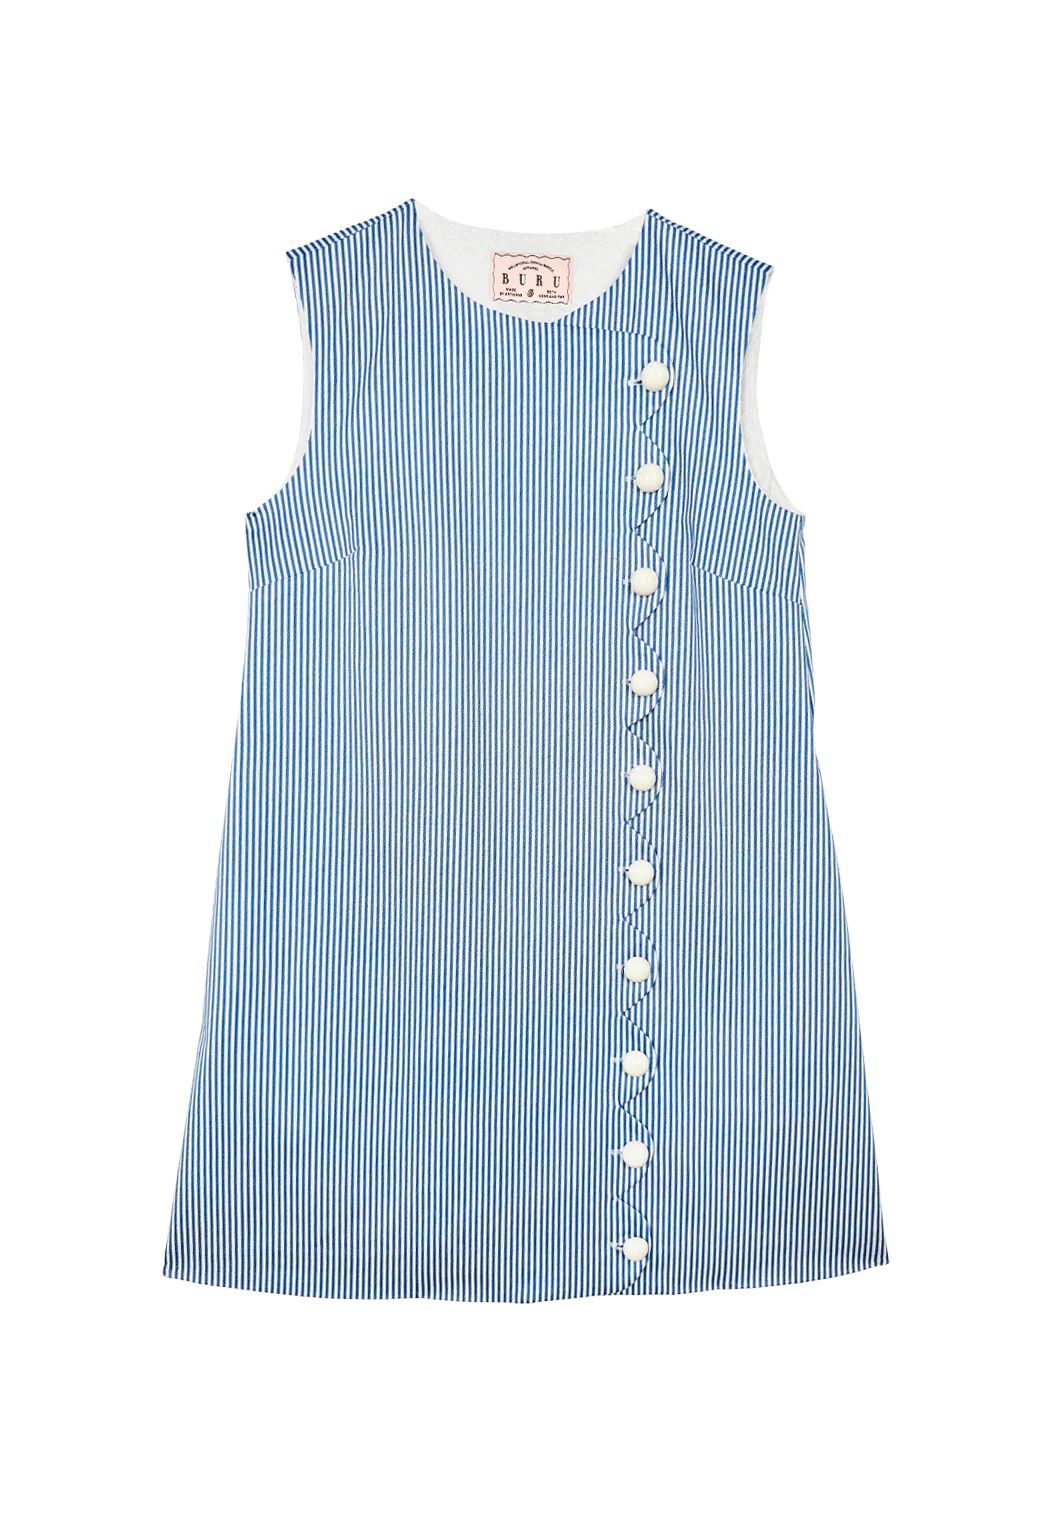 Buru x Kelly Golightly Scallop Shift Dress - Blue Stripe | Shop BURU